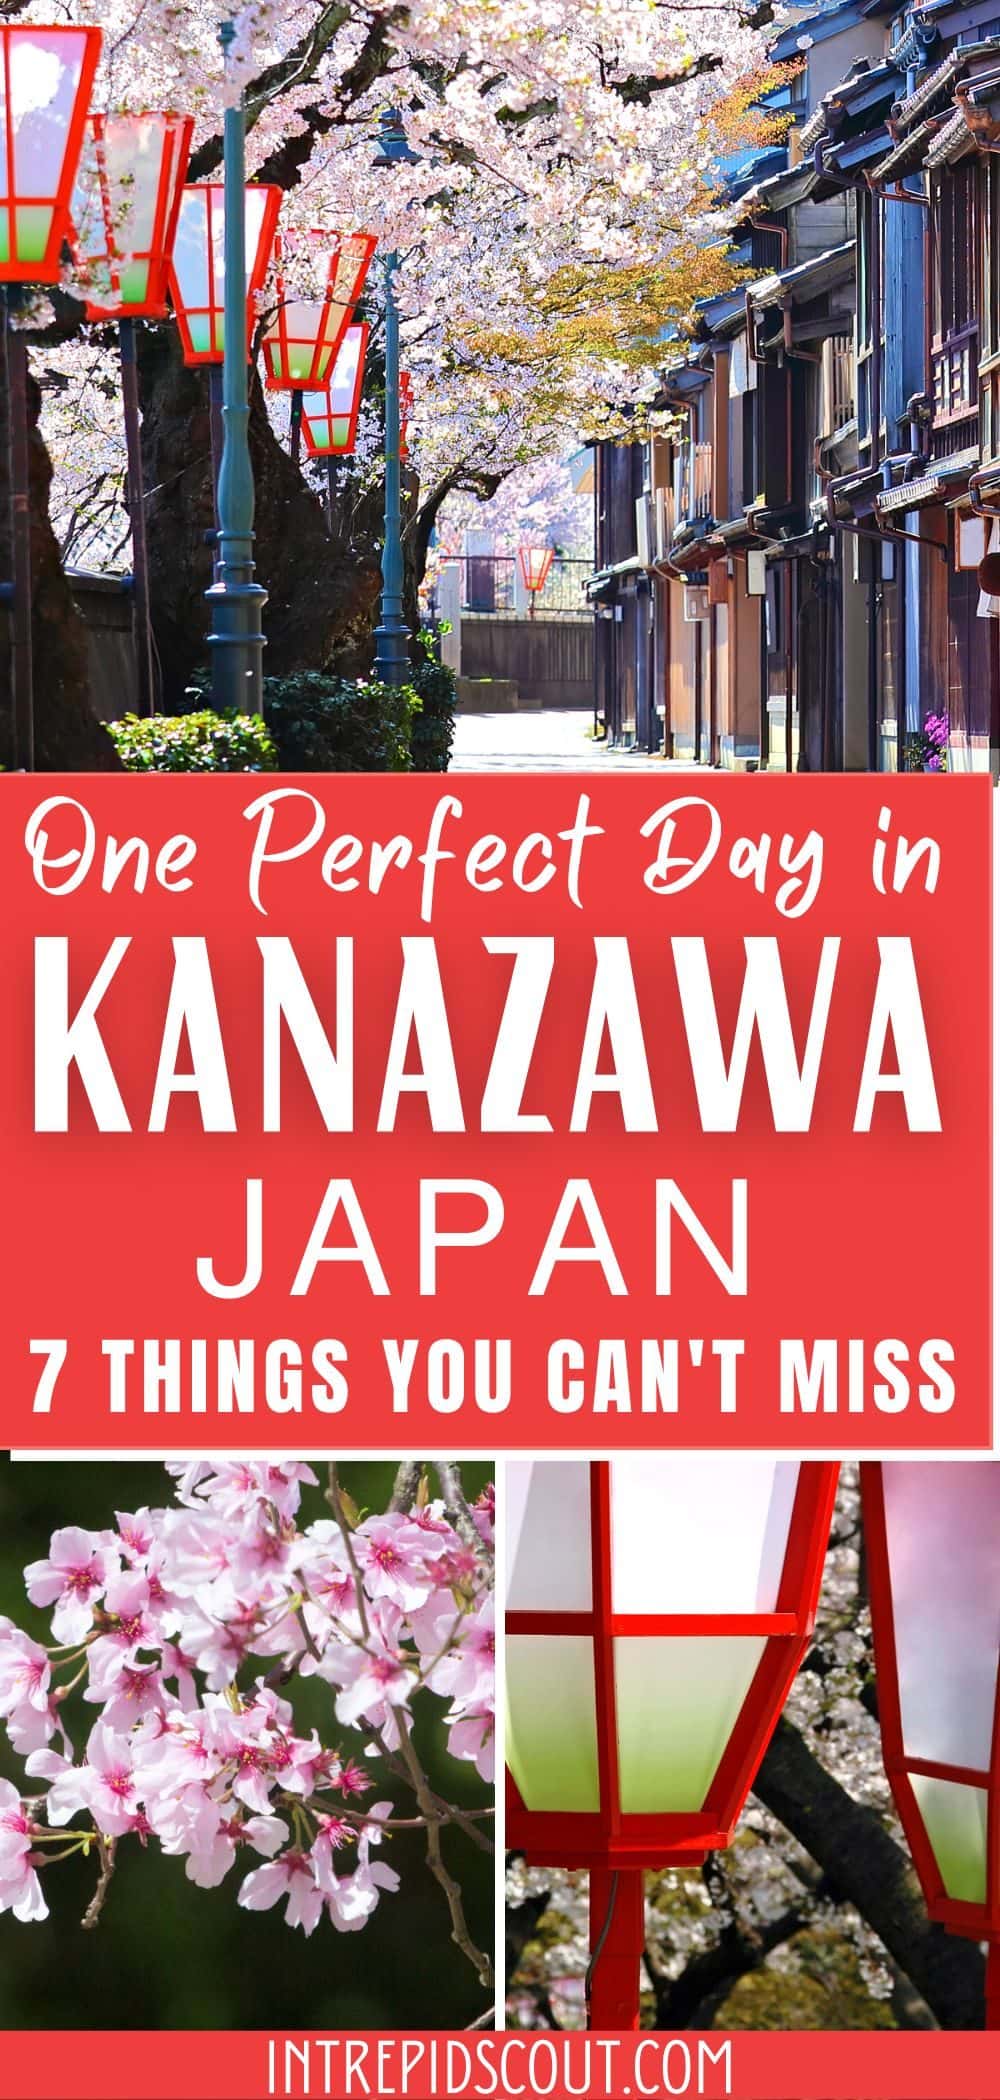 One Day in Kanazawa